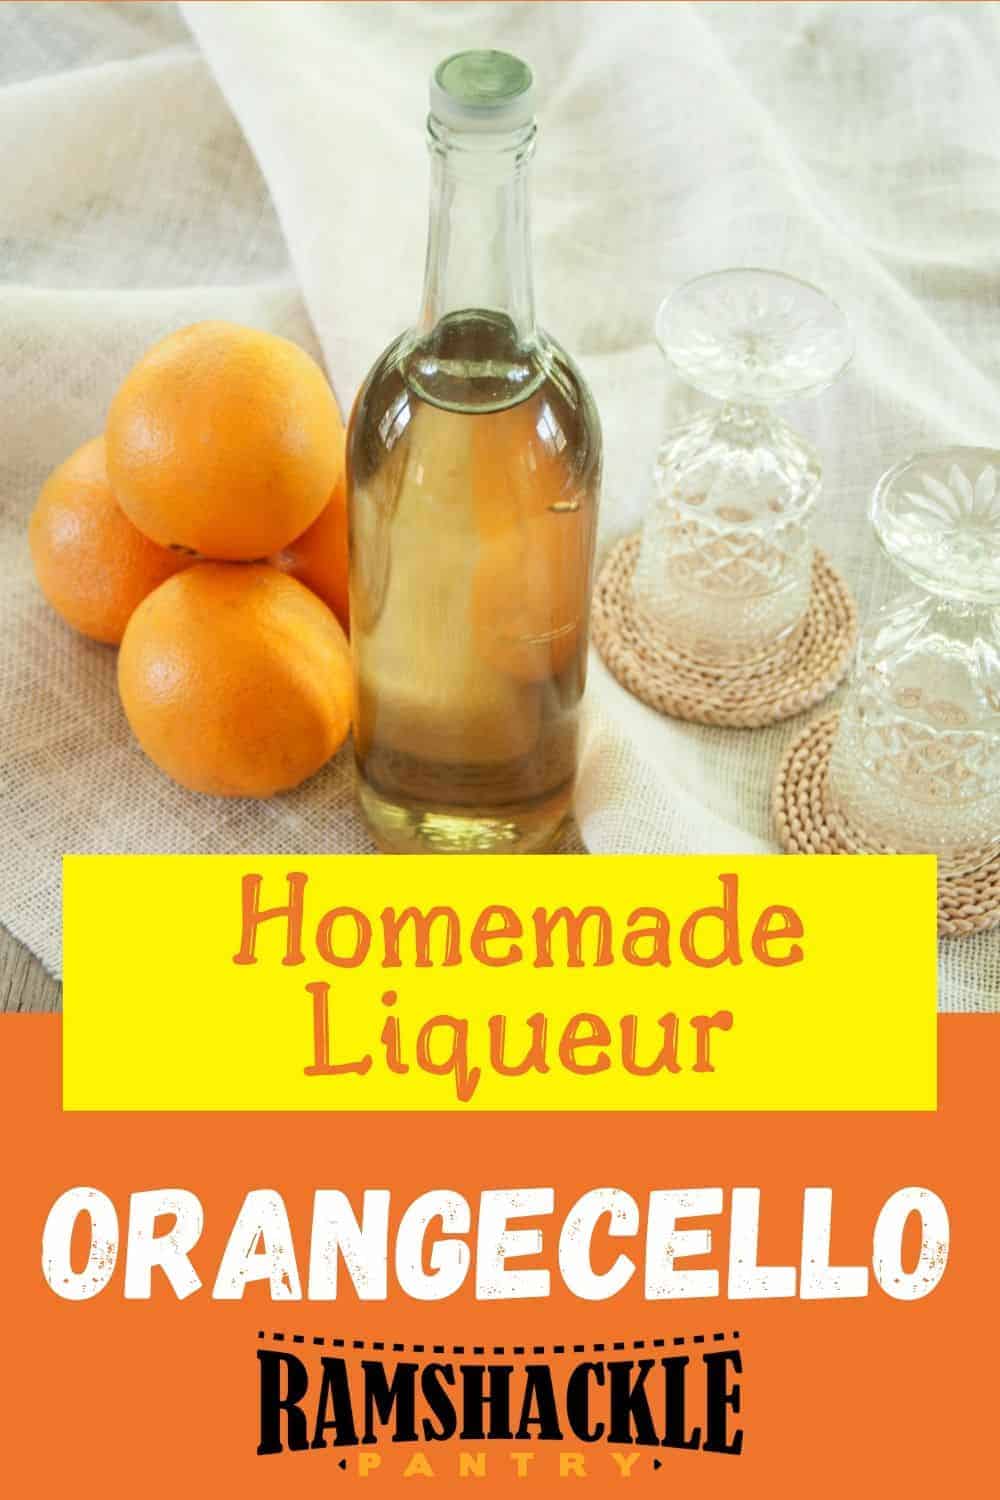 Homemade Orangecello Recipe - Ramshackle Pantry